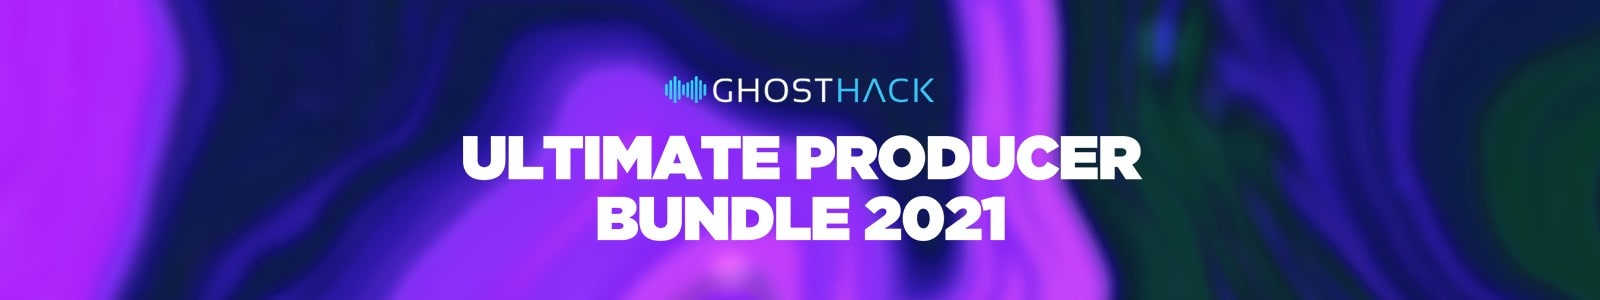 ultimate producer bundle 2021